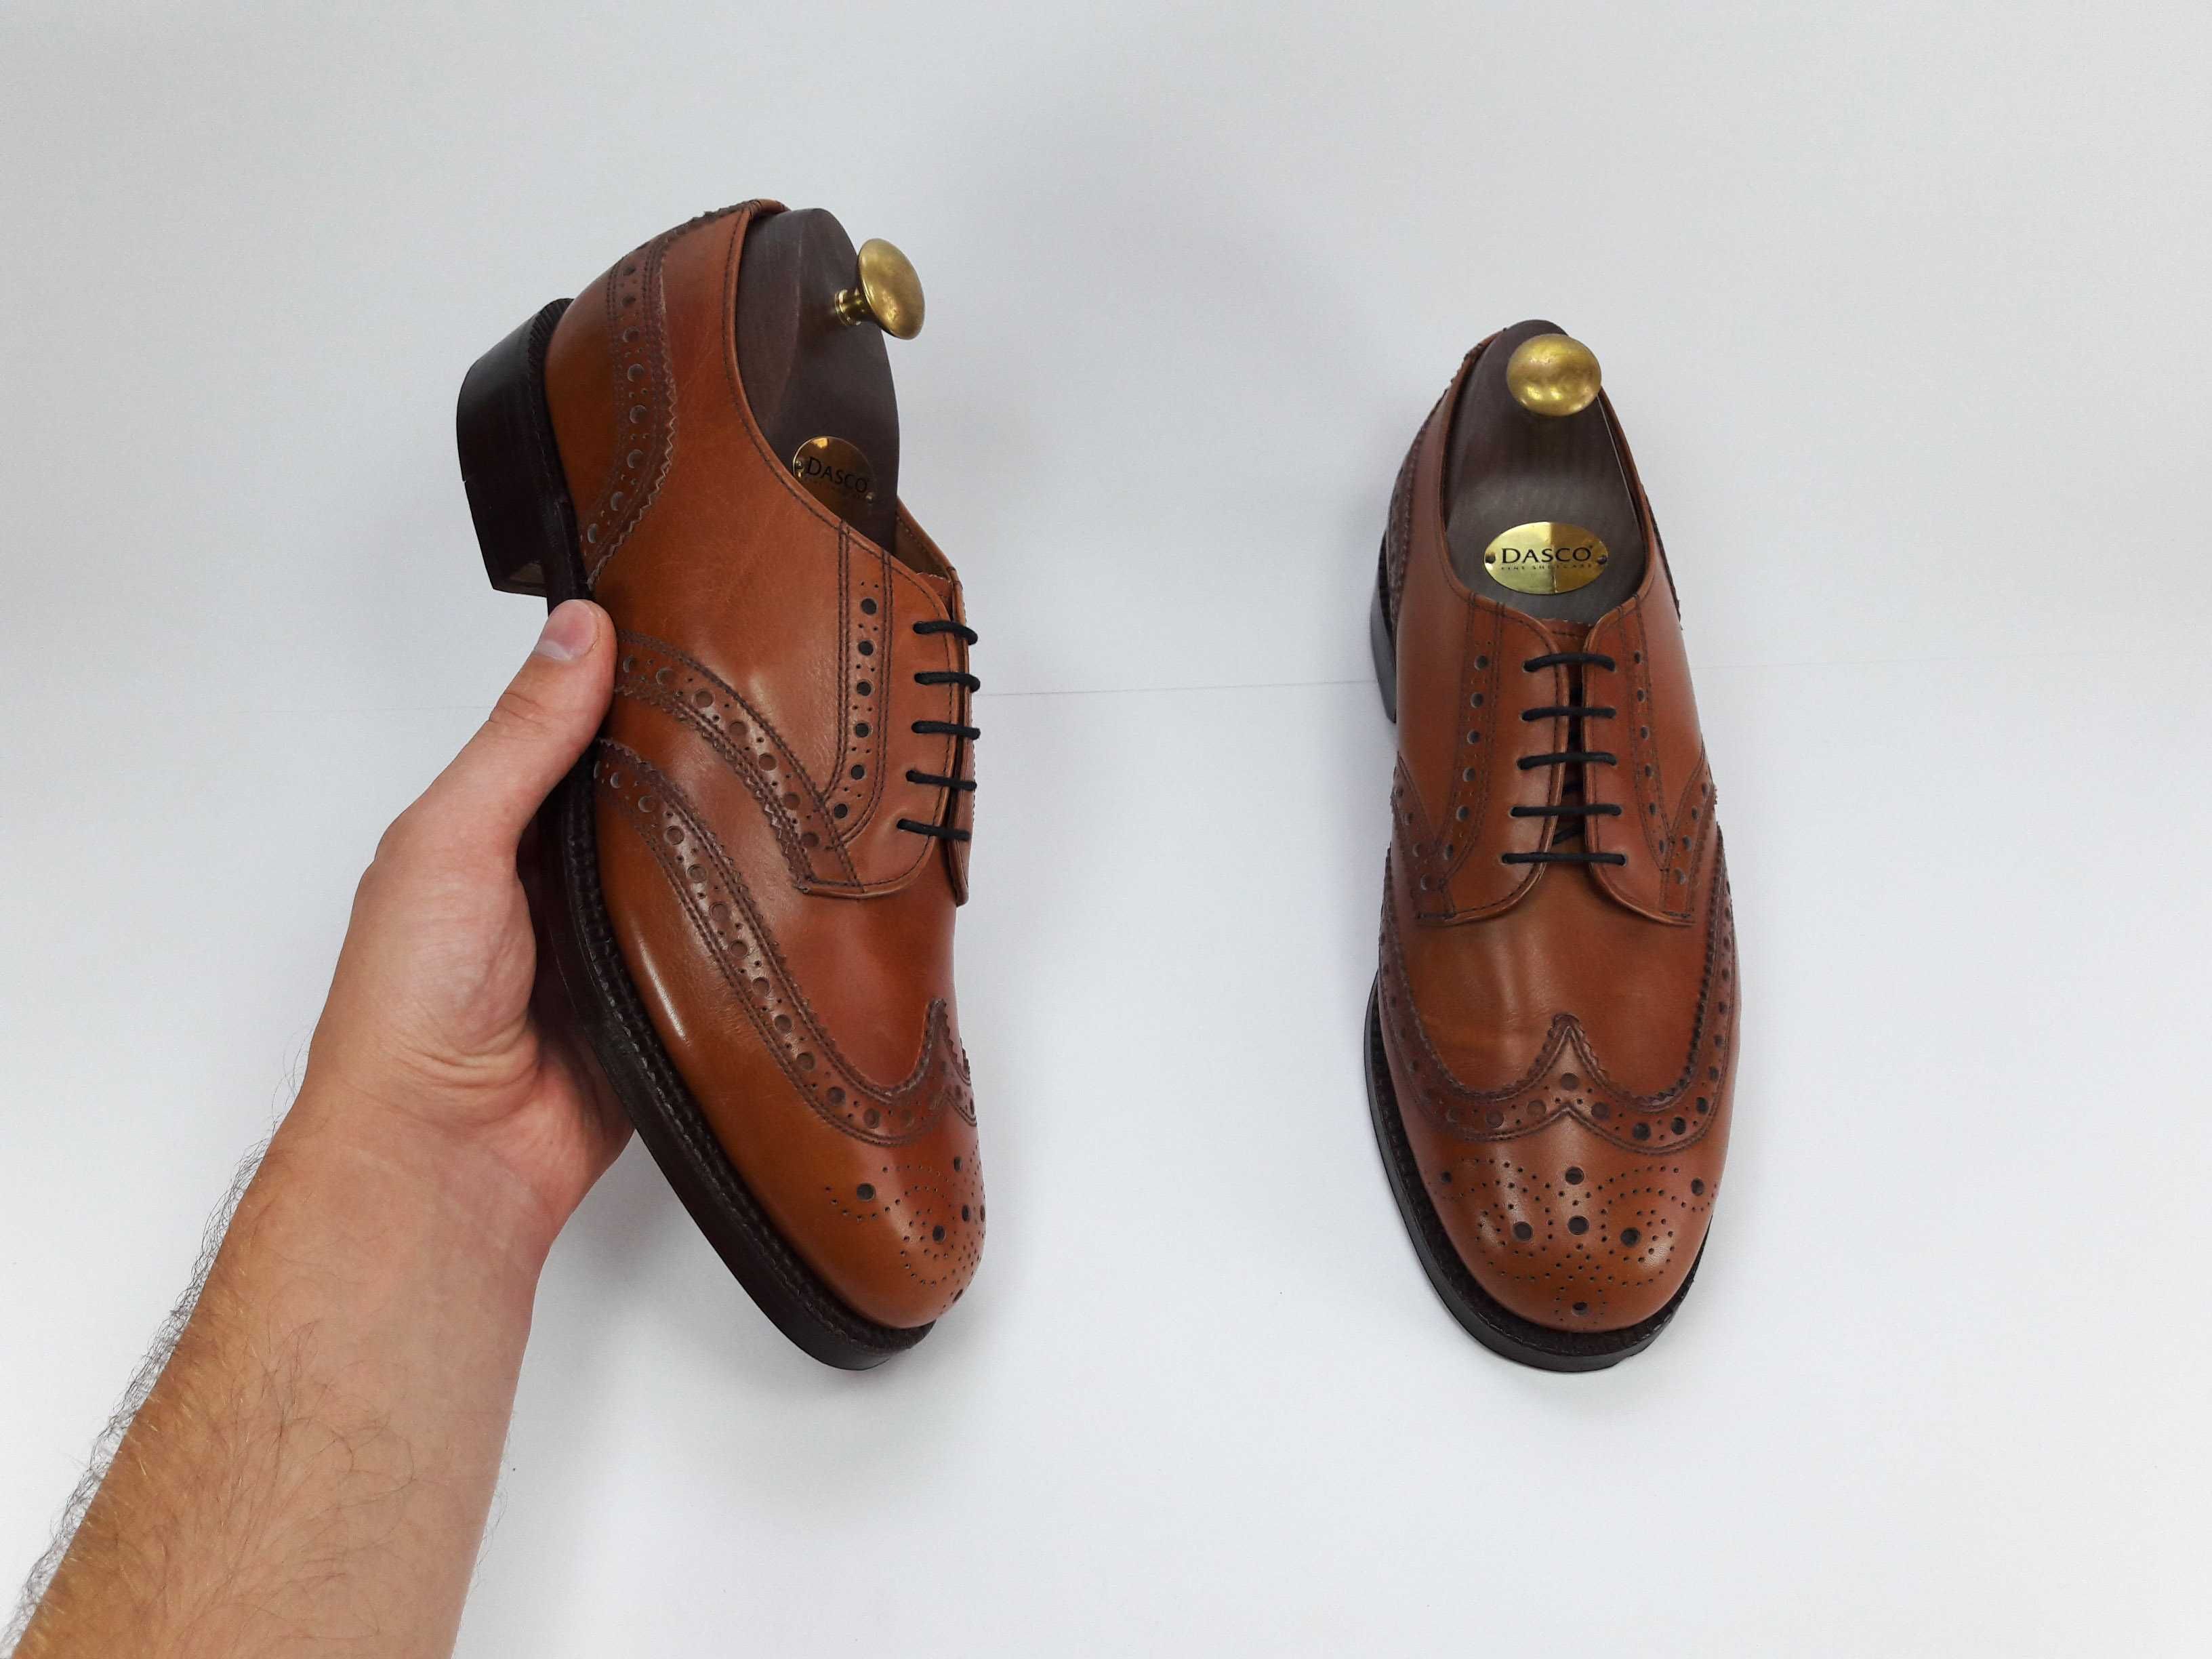 Jones Made in England кожаные туфли броги туфлі 41 42 26.5-27 см